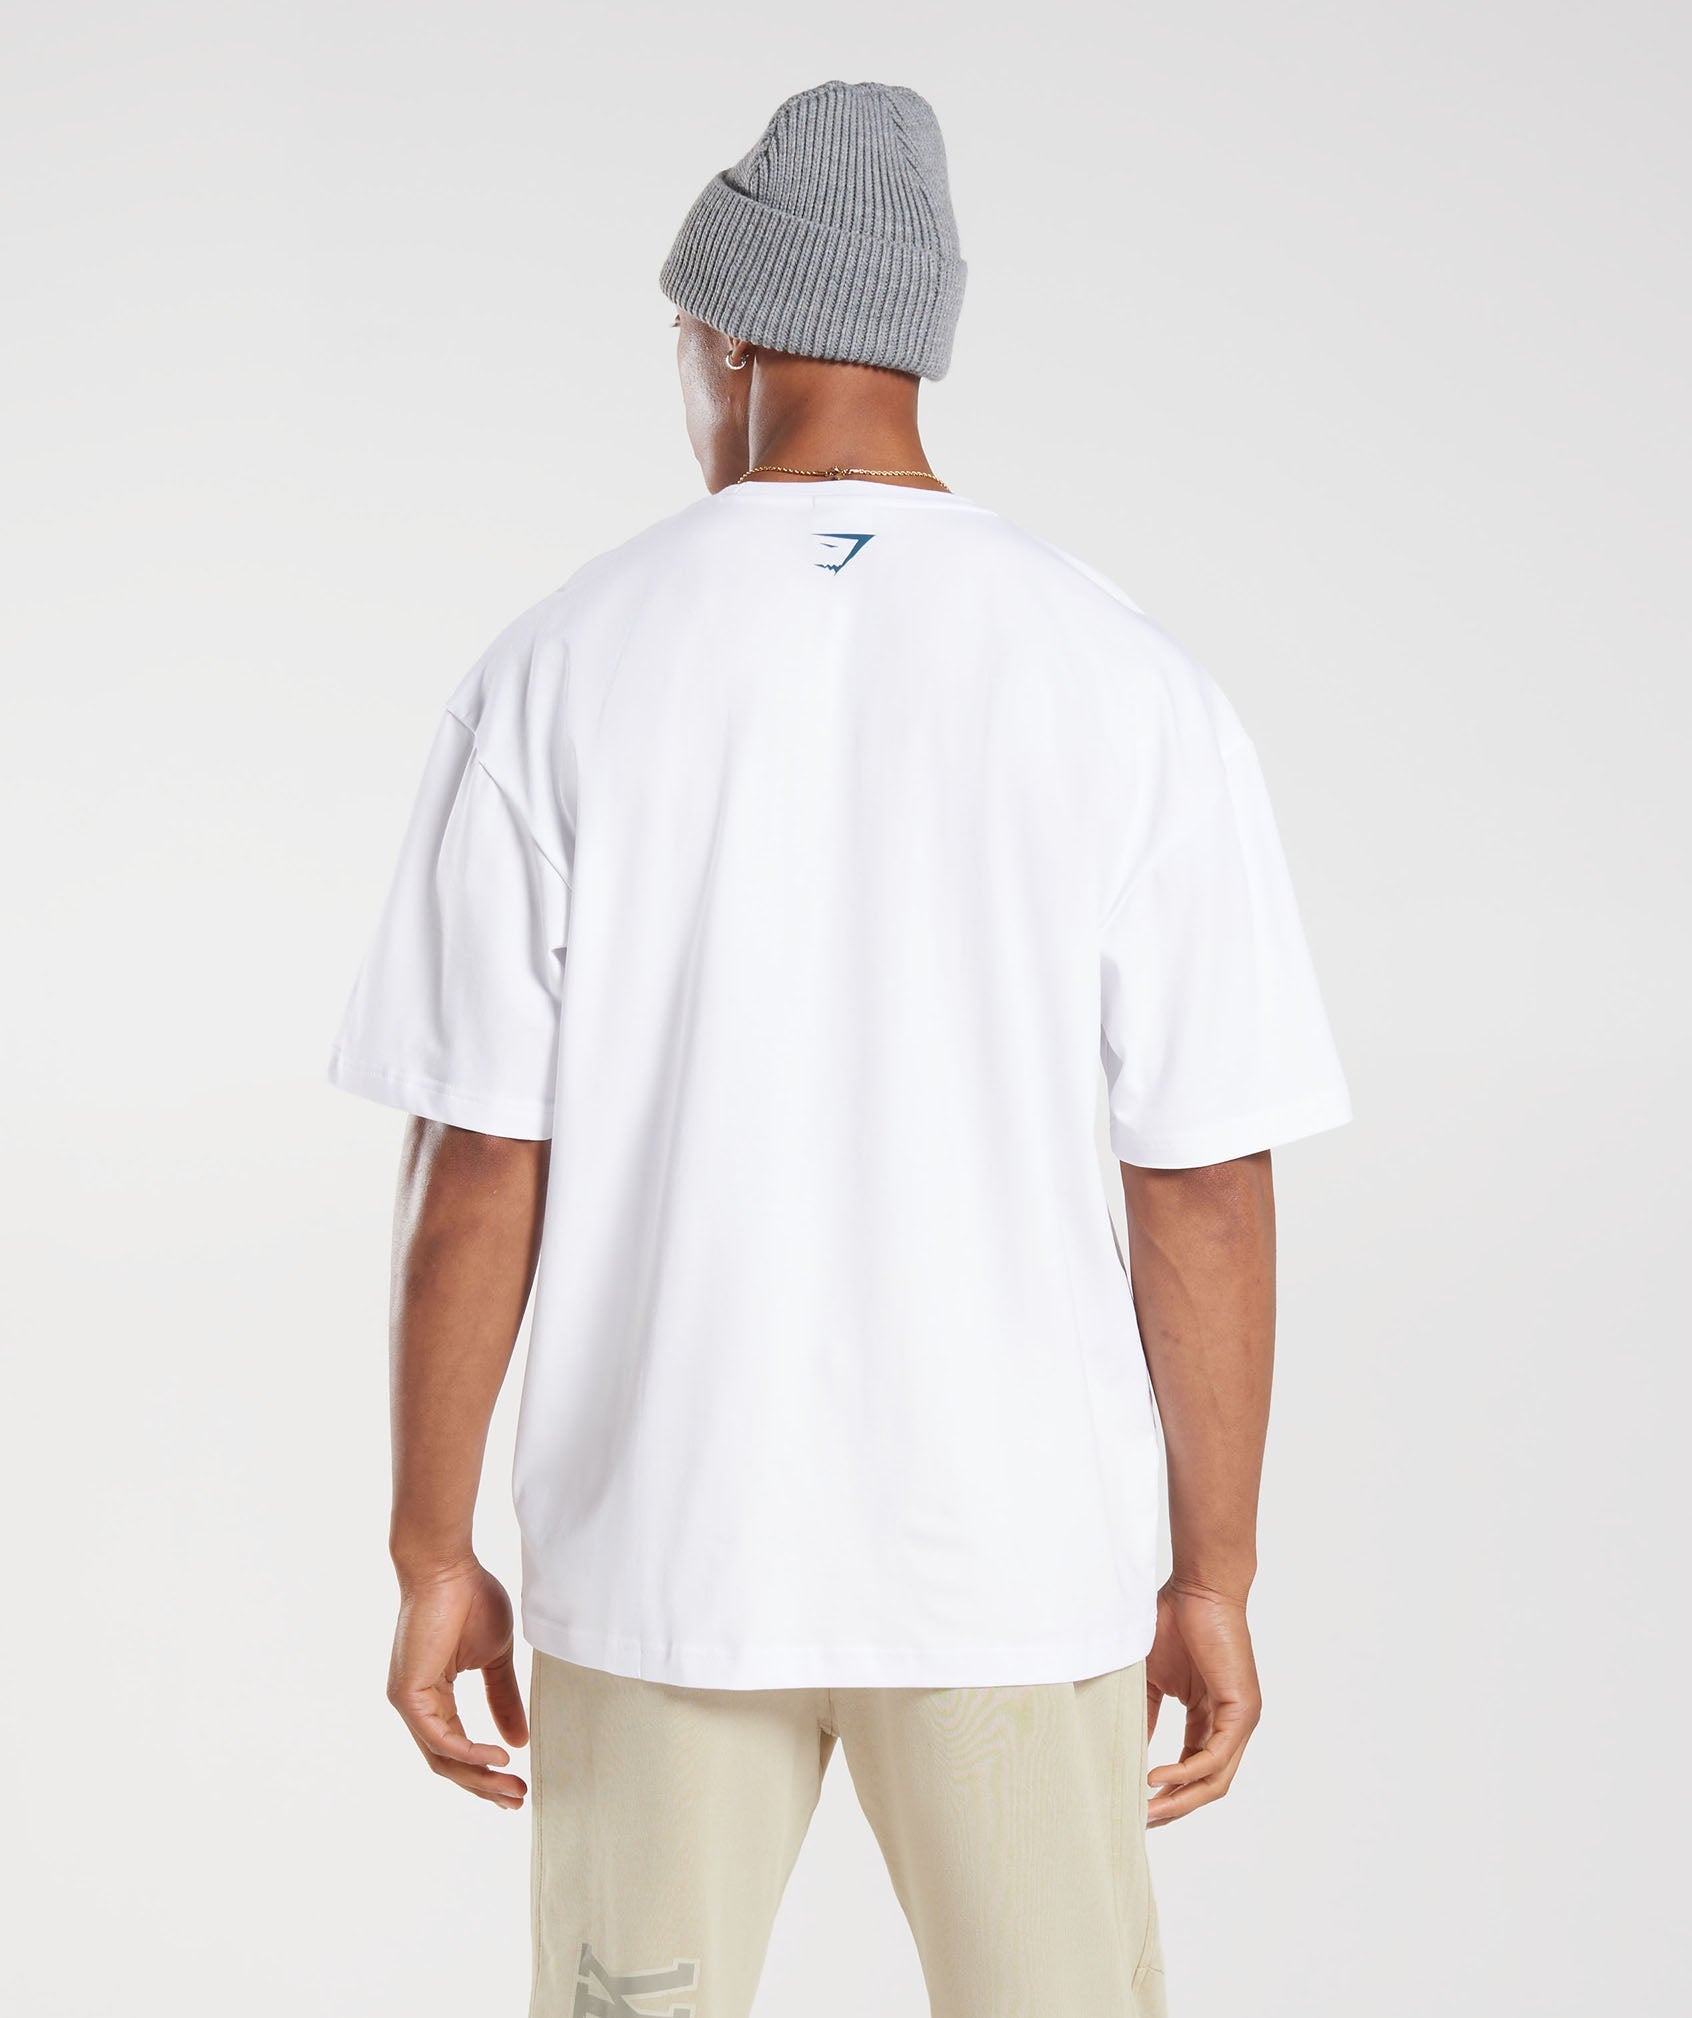 Collegiate Oversized T-Shirt in White - view 2